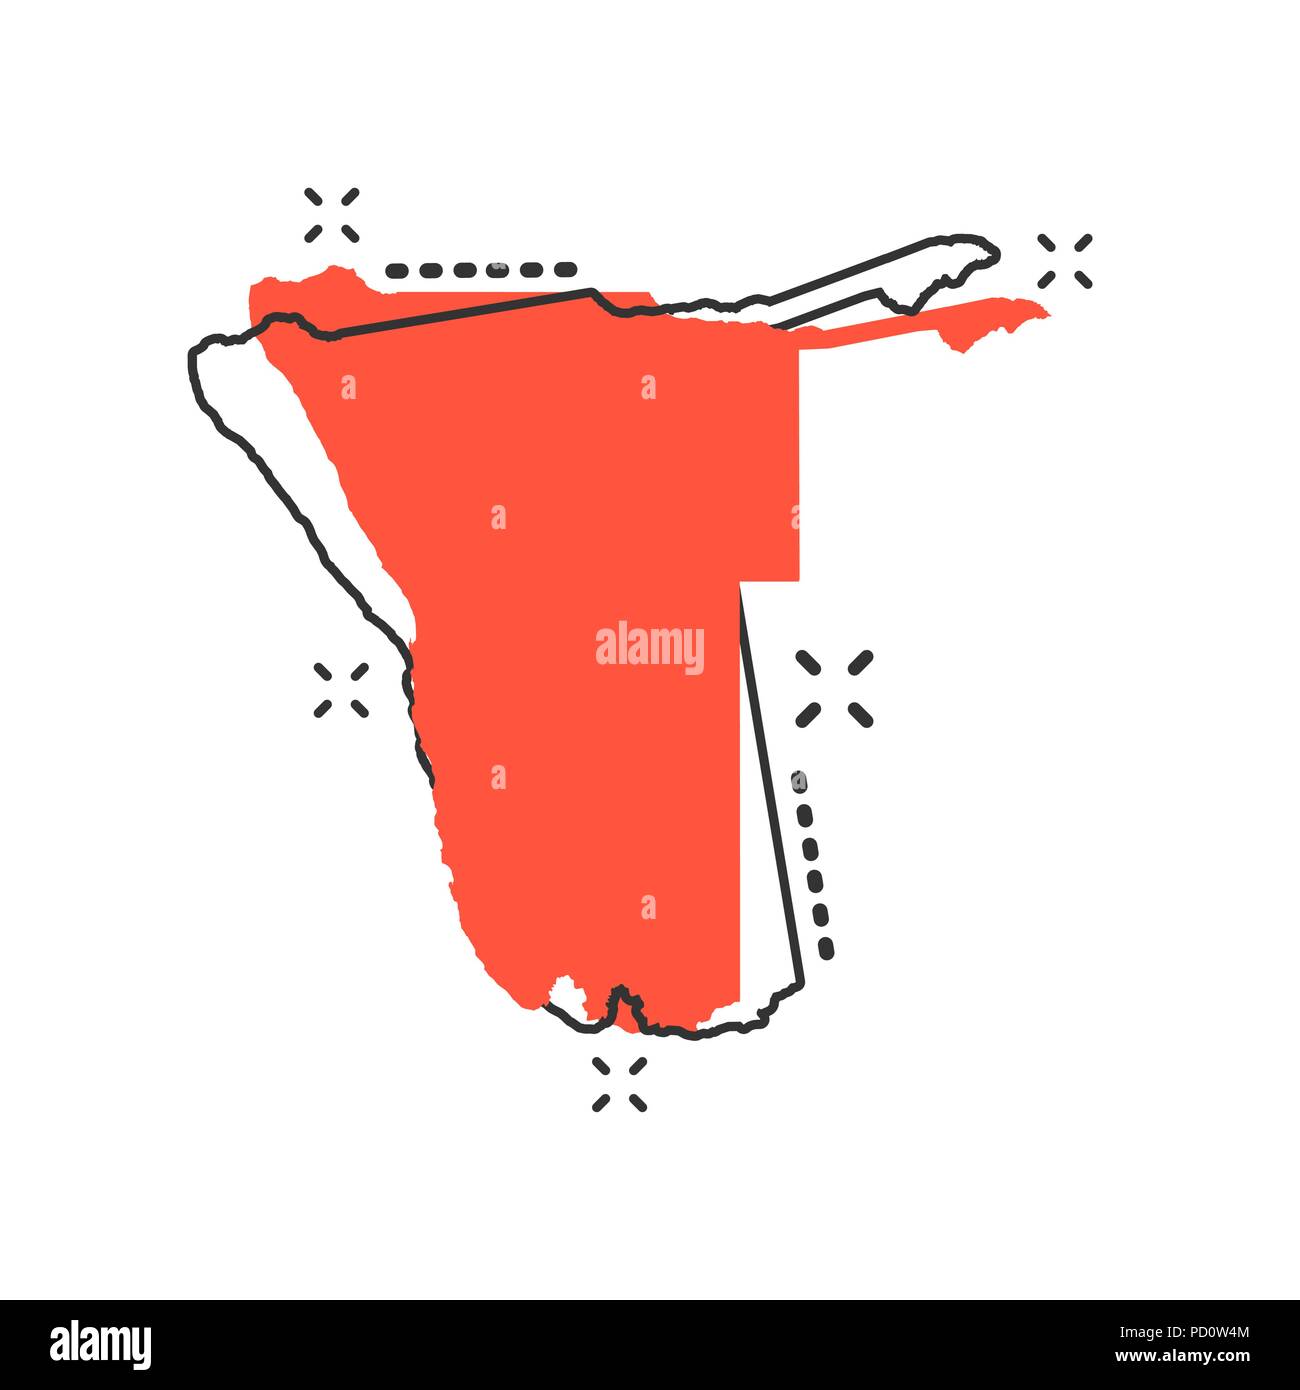 Vektor cartoon Namibia Karte Symbol im Comic-stil. Namibia zeichen Abbildung Piktogramm. Kartographie Karte business splash Wirkung Konzept. Stock Vektor